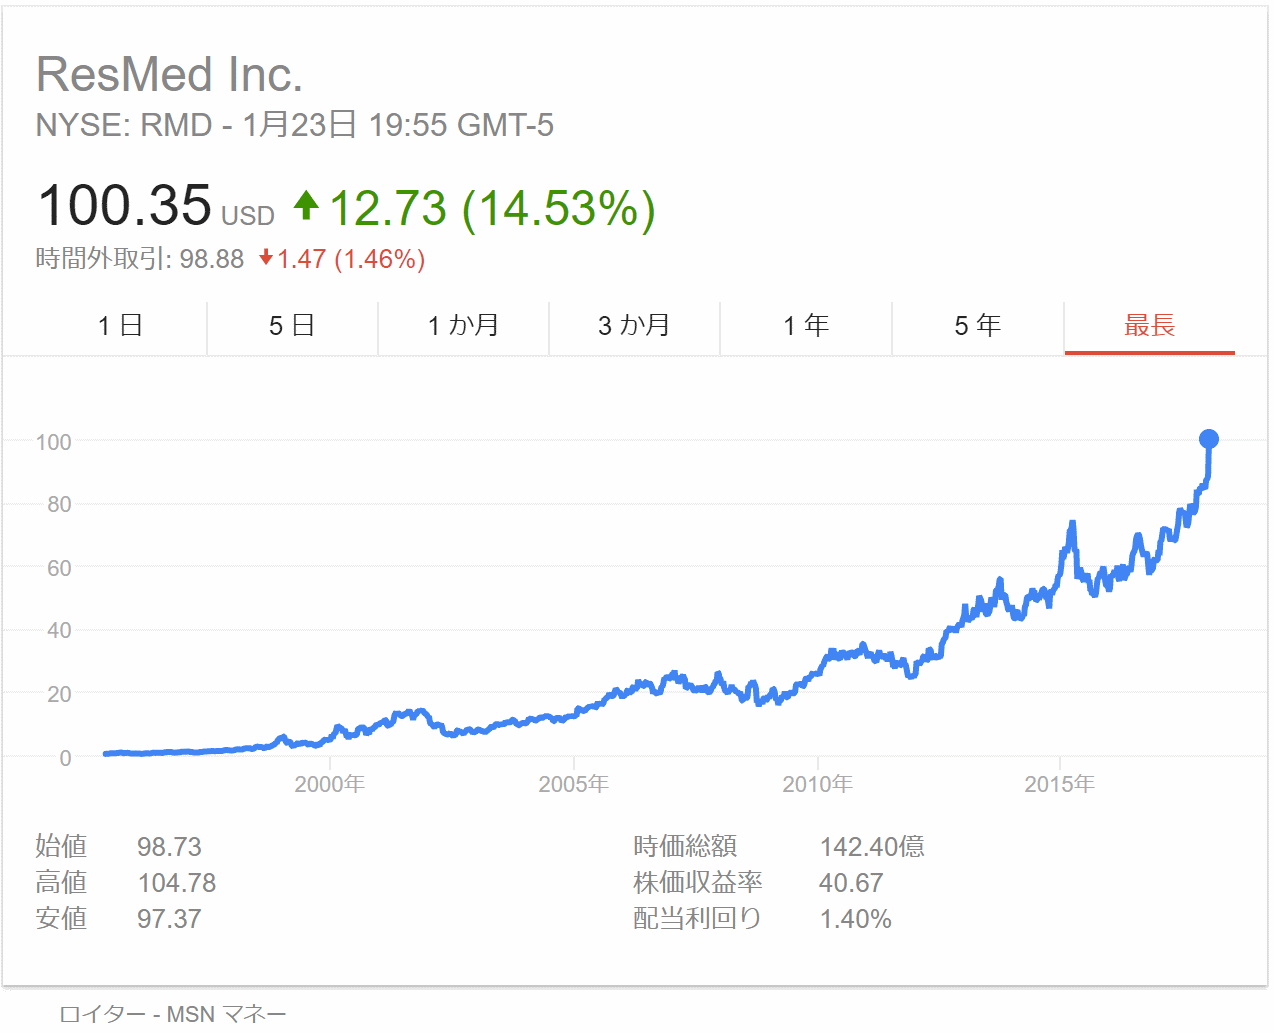 NYSE-RMD-STOCK-PRICE